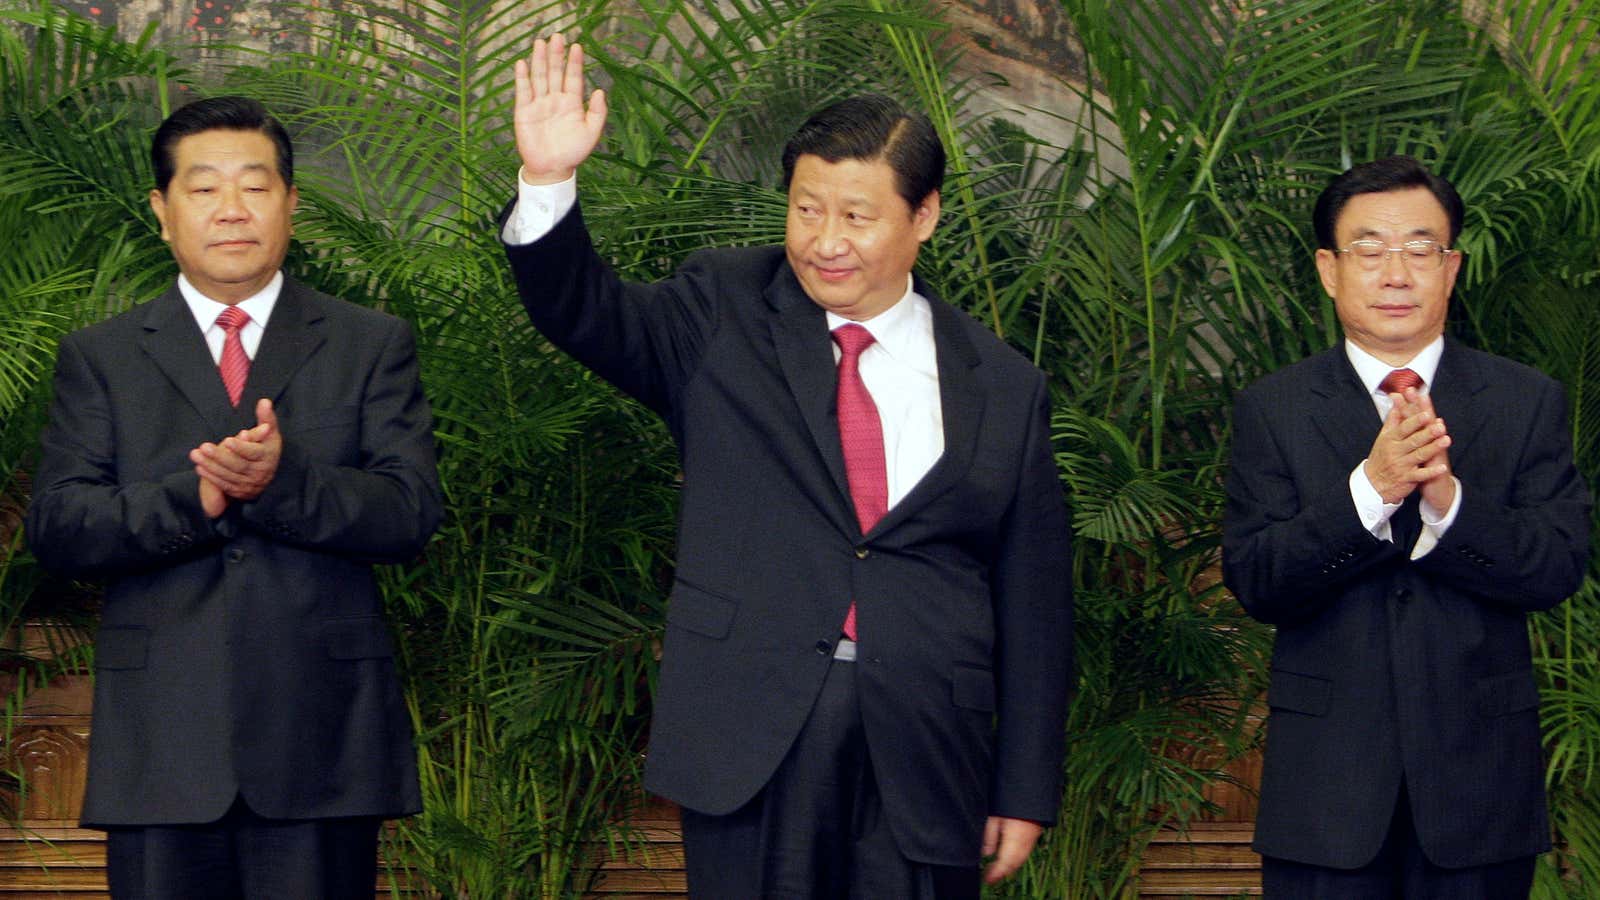 Xi Jinping and Jia Qinglin (L) as new members of Politburo Standing Committee in 2007.